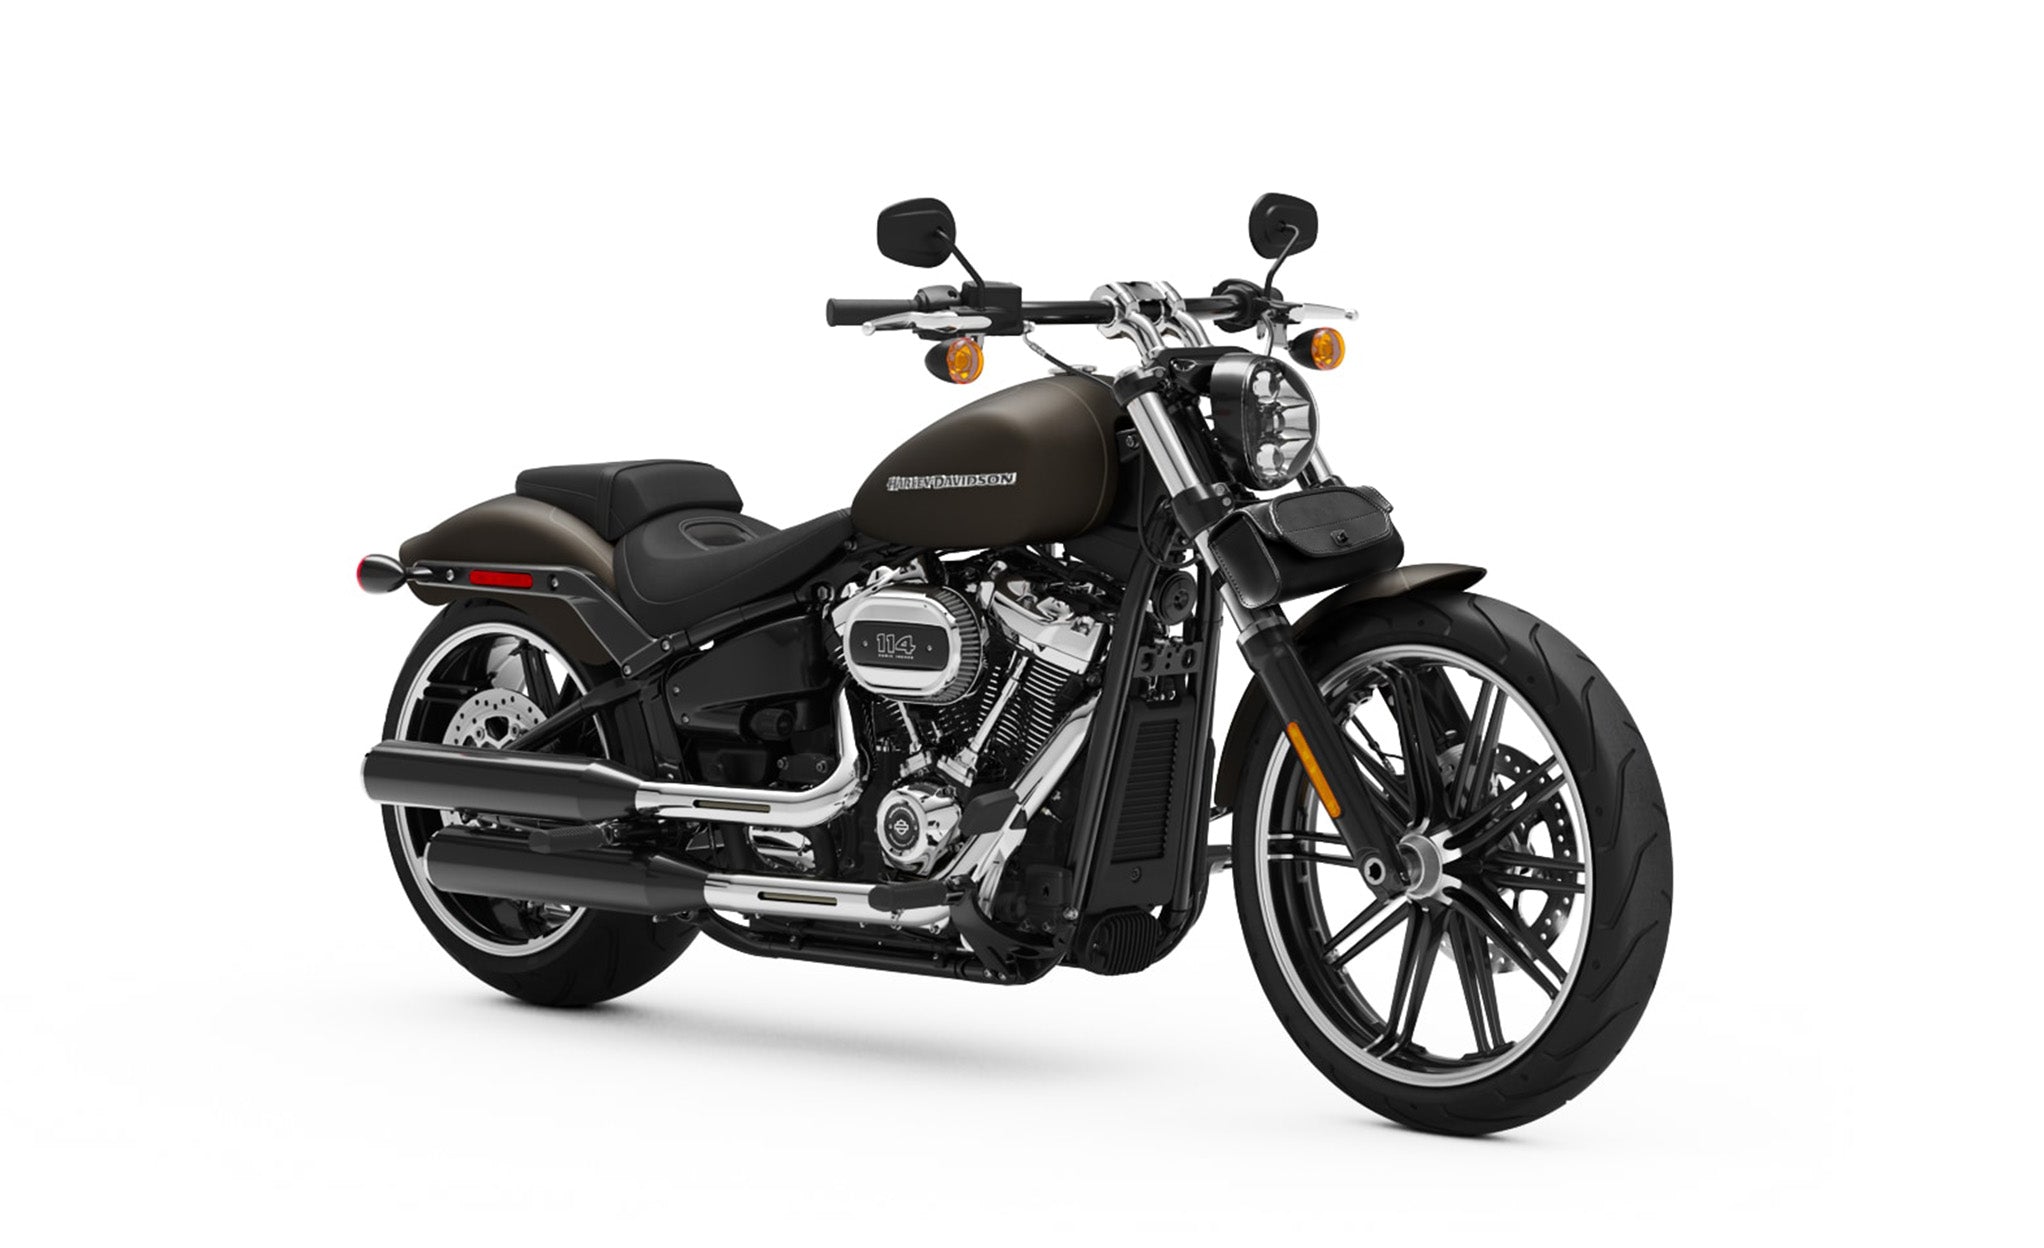 Viking Twist Essential Leather Motorcycle Handlebar Bag for Harley Davidson Bag on Bike View @expand